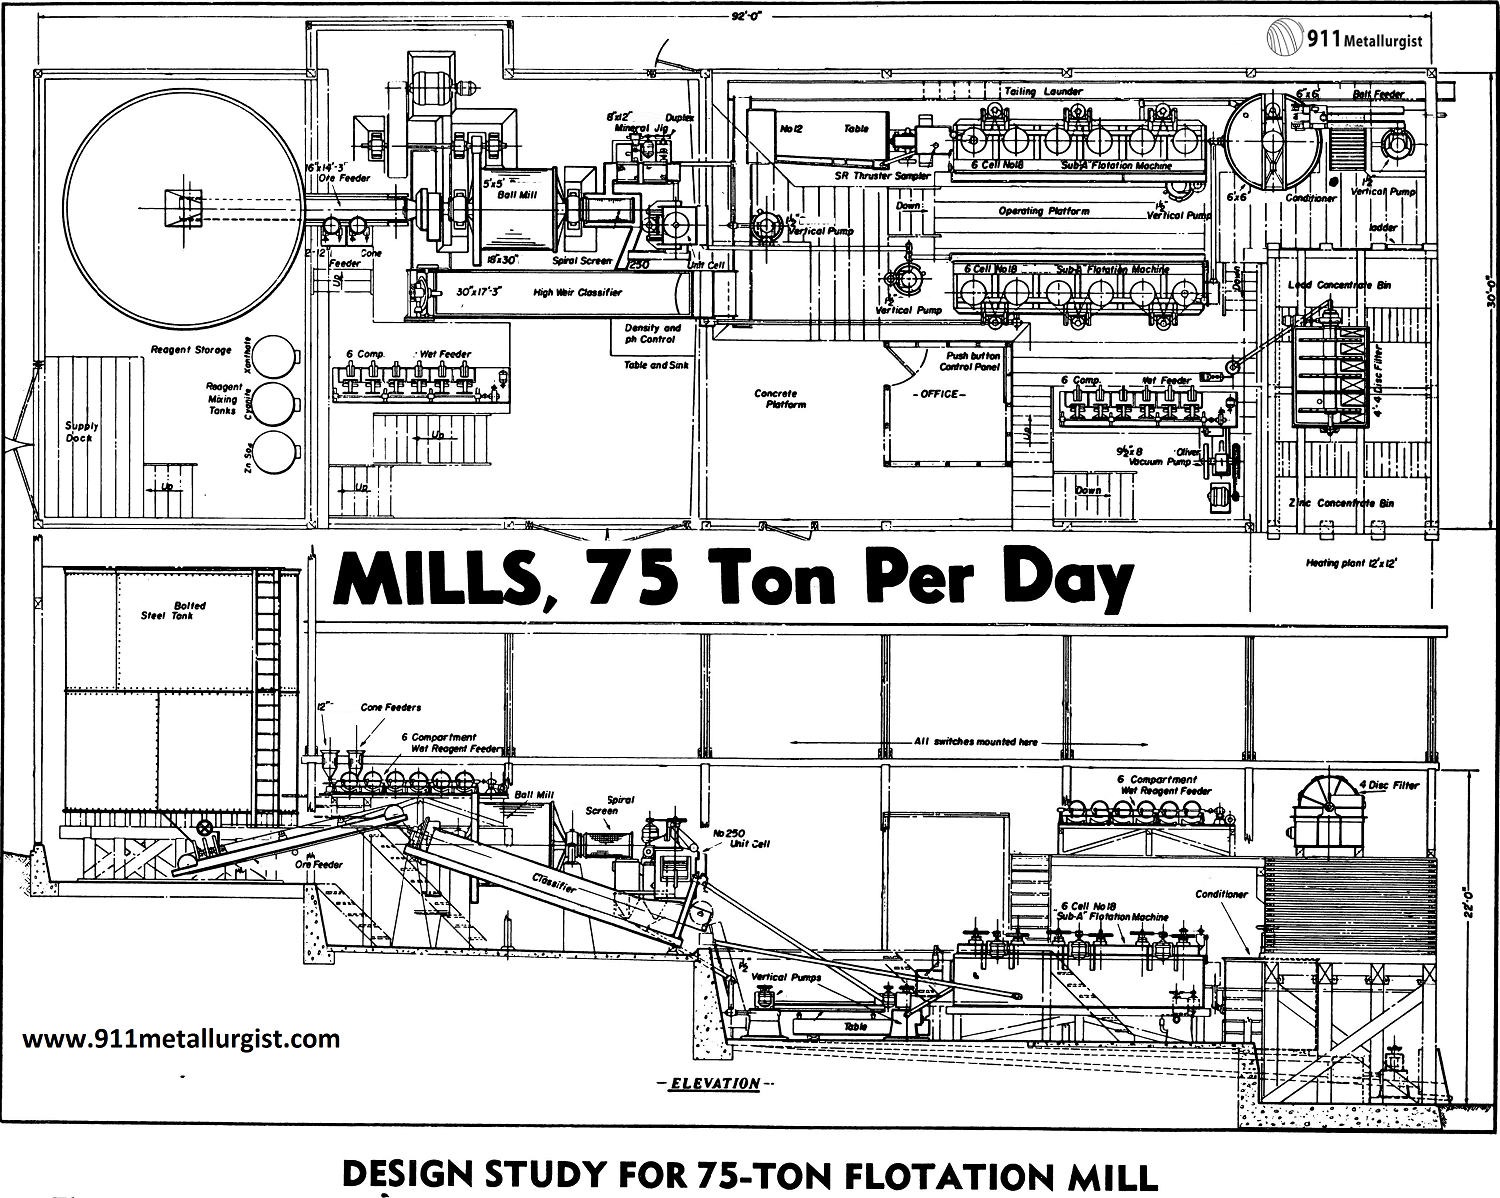 Design Study for 75-Ton Flotation Mill